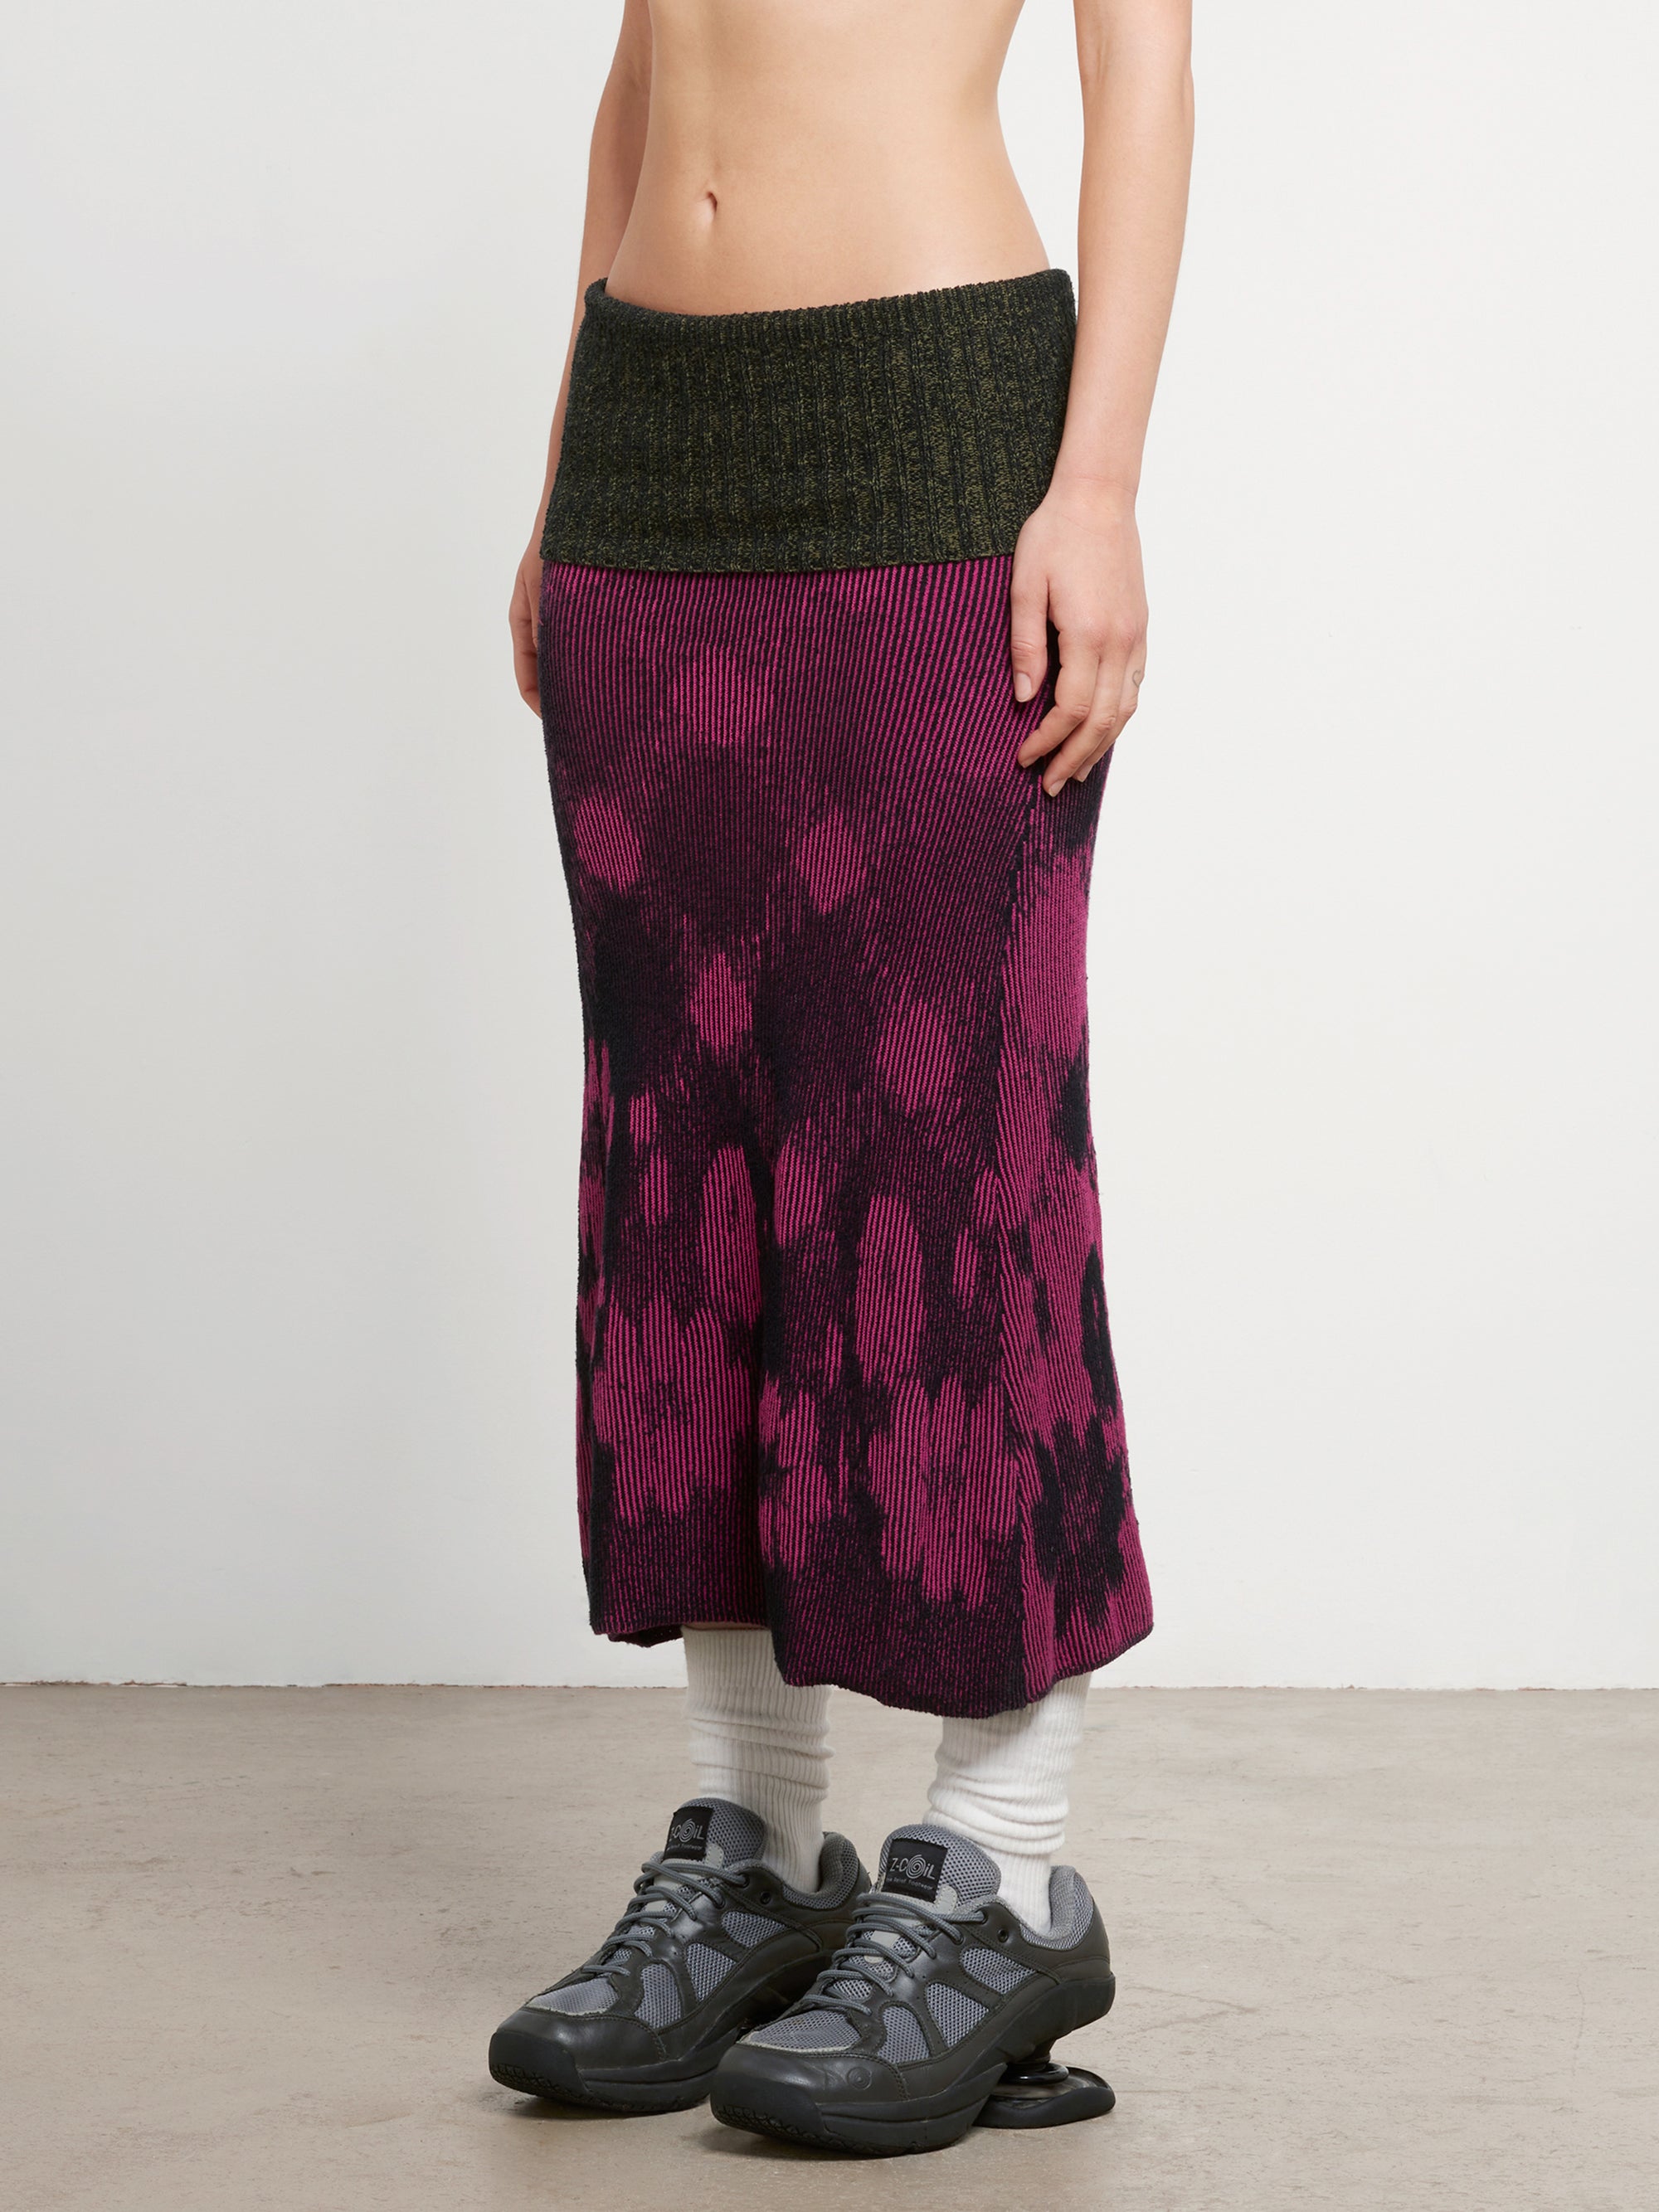 Paolina Russo - Women’s Illusion Knit Maxi Skirt - (Magenta/Black) view 3